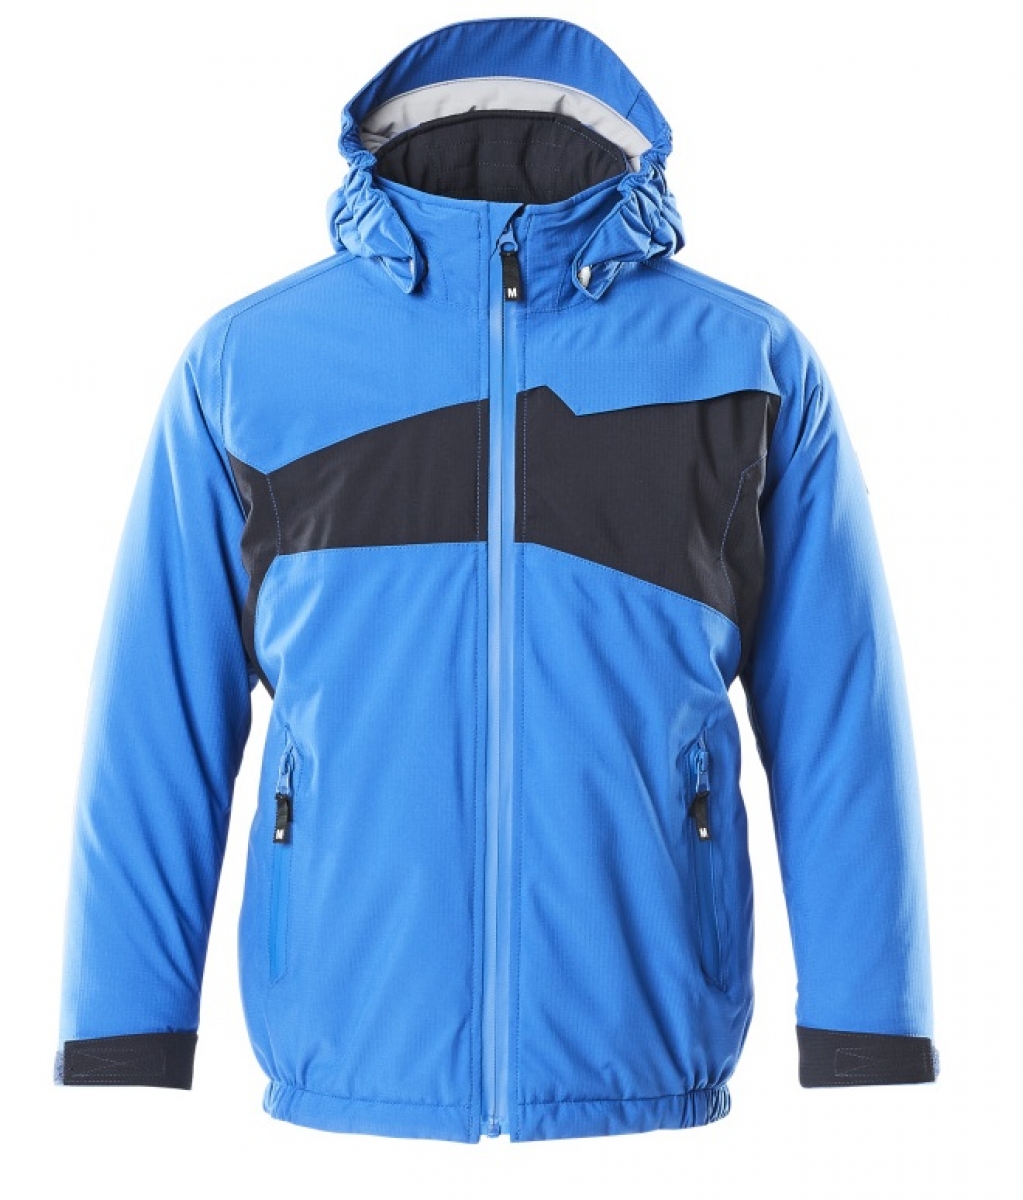 MASCOT-Workwear, Kinder Winterjacke, 115 g/m, azurblau/schwarzblau